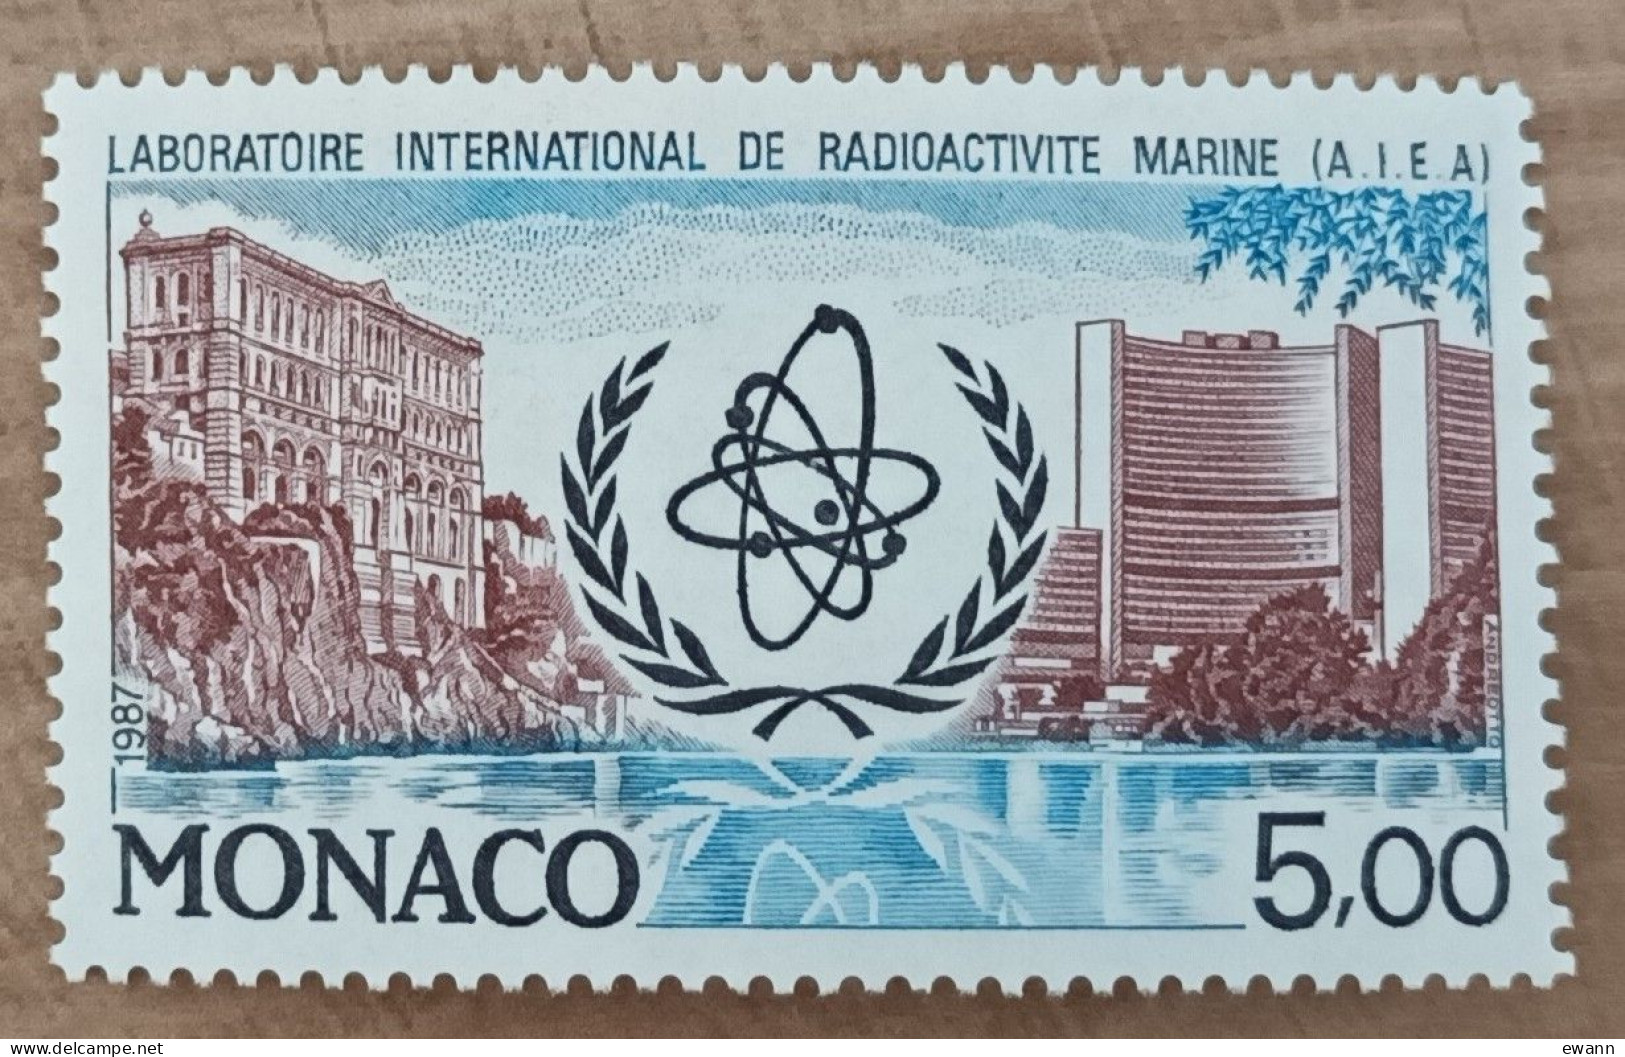 Monaco - YT N°1602 - Laboratoire International De Radioactivité Marine - 1987 - Neuf - Unused Stamps